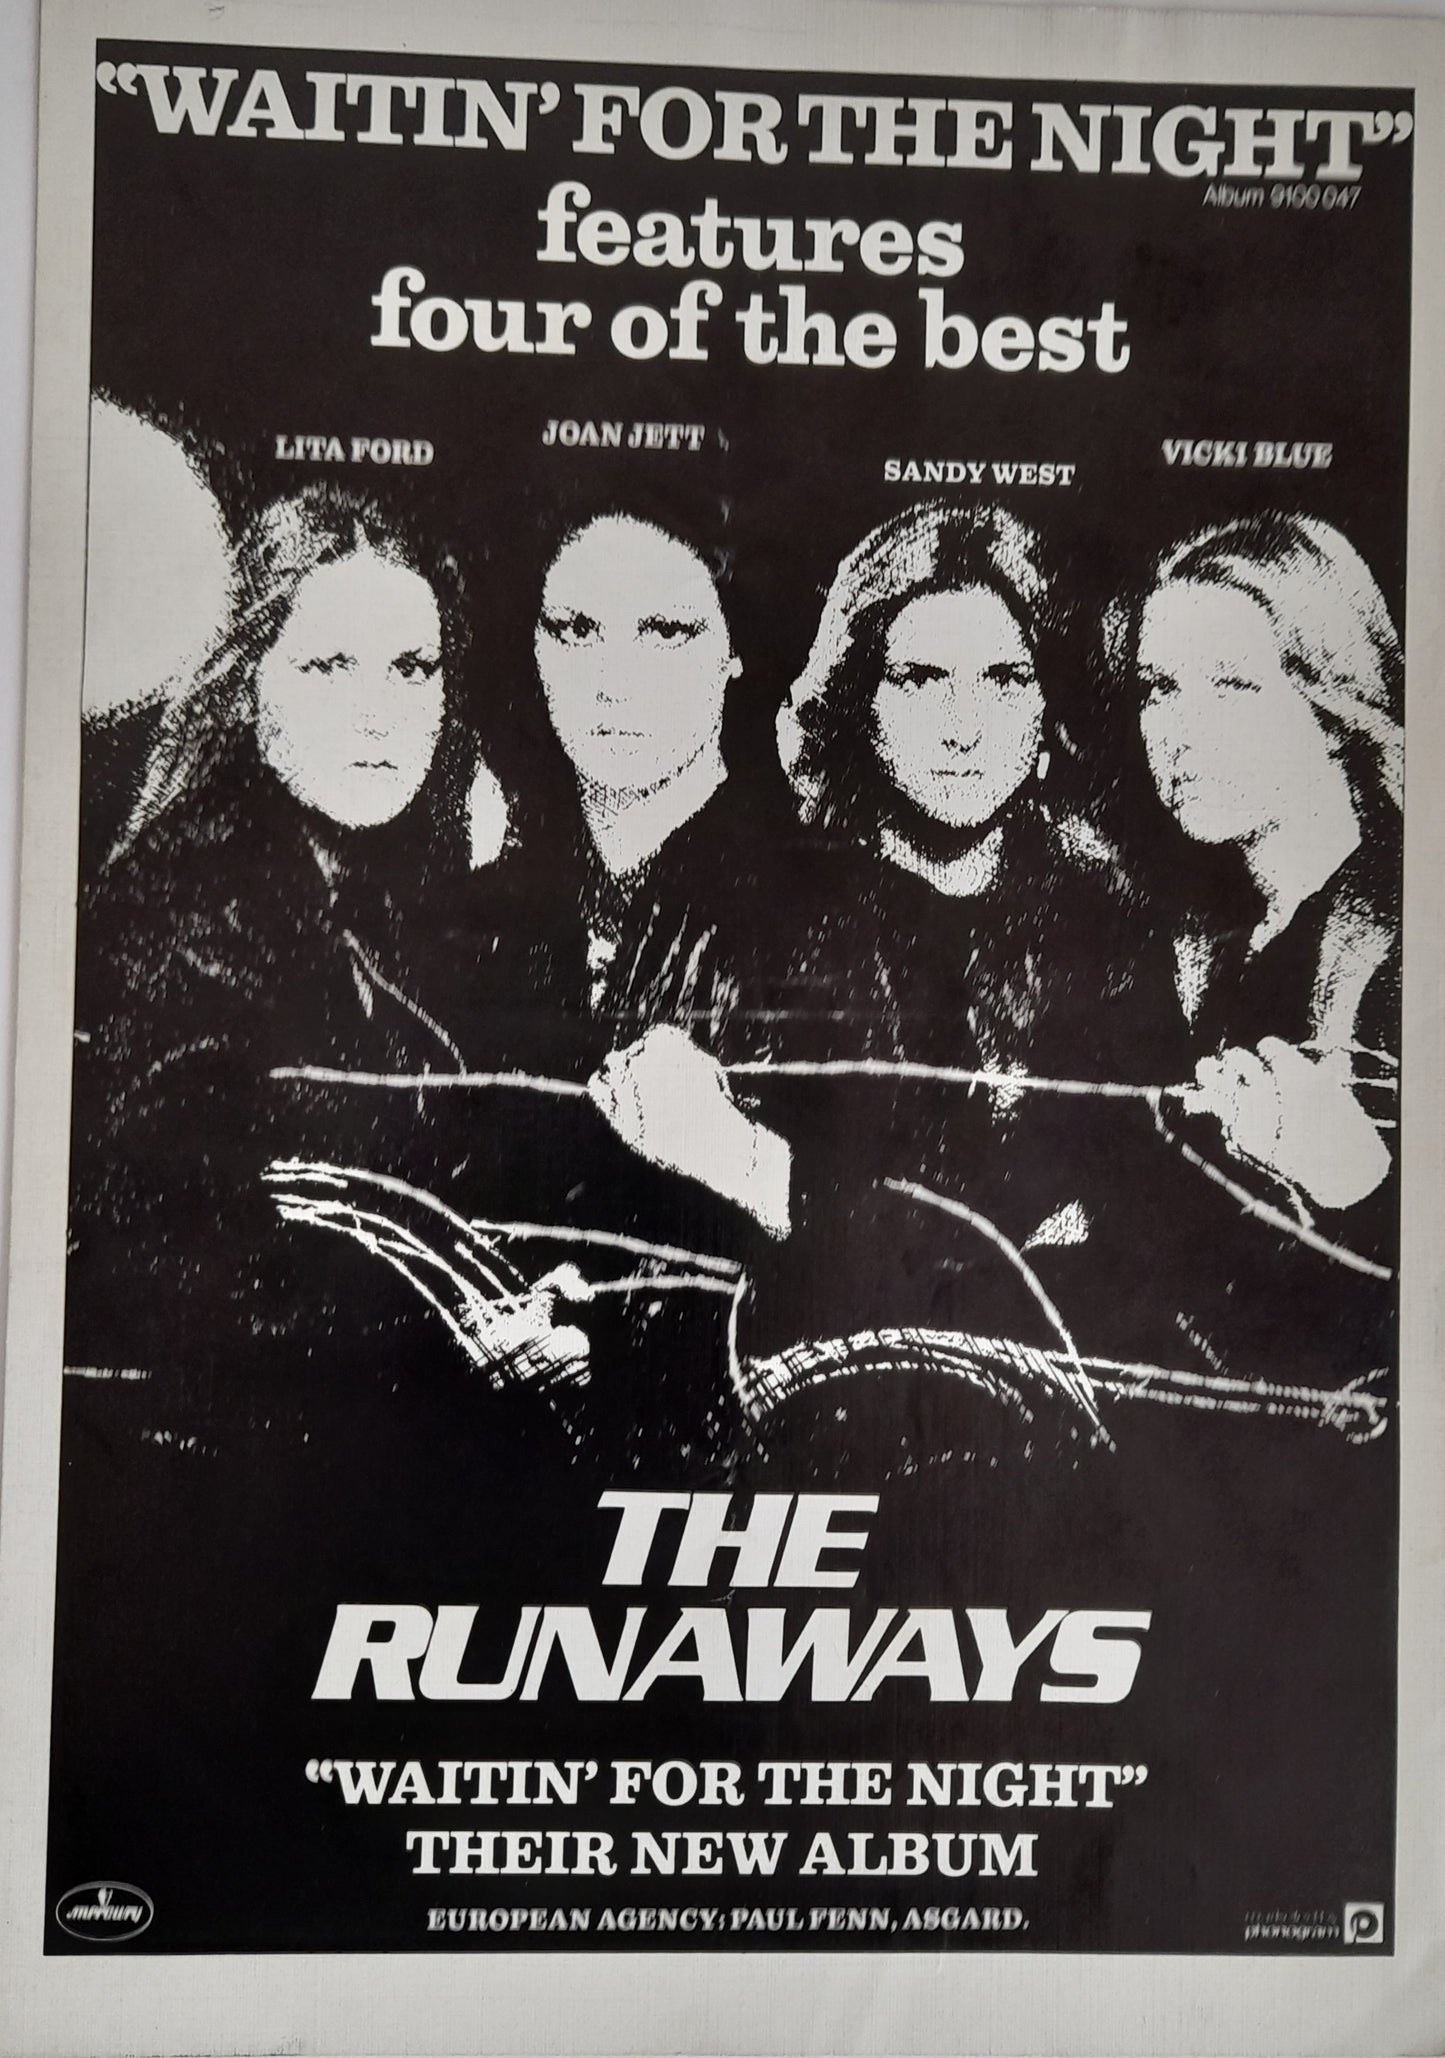 Runaways Joan Jett UK 1977 Concert Programme with ticket stub